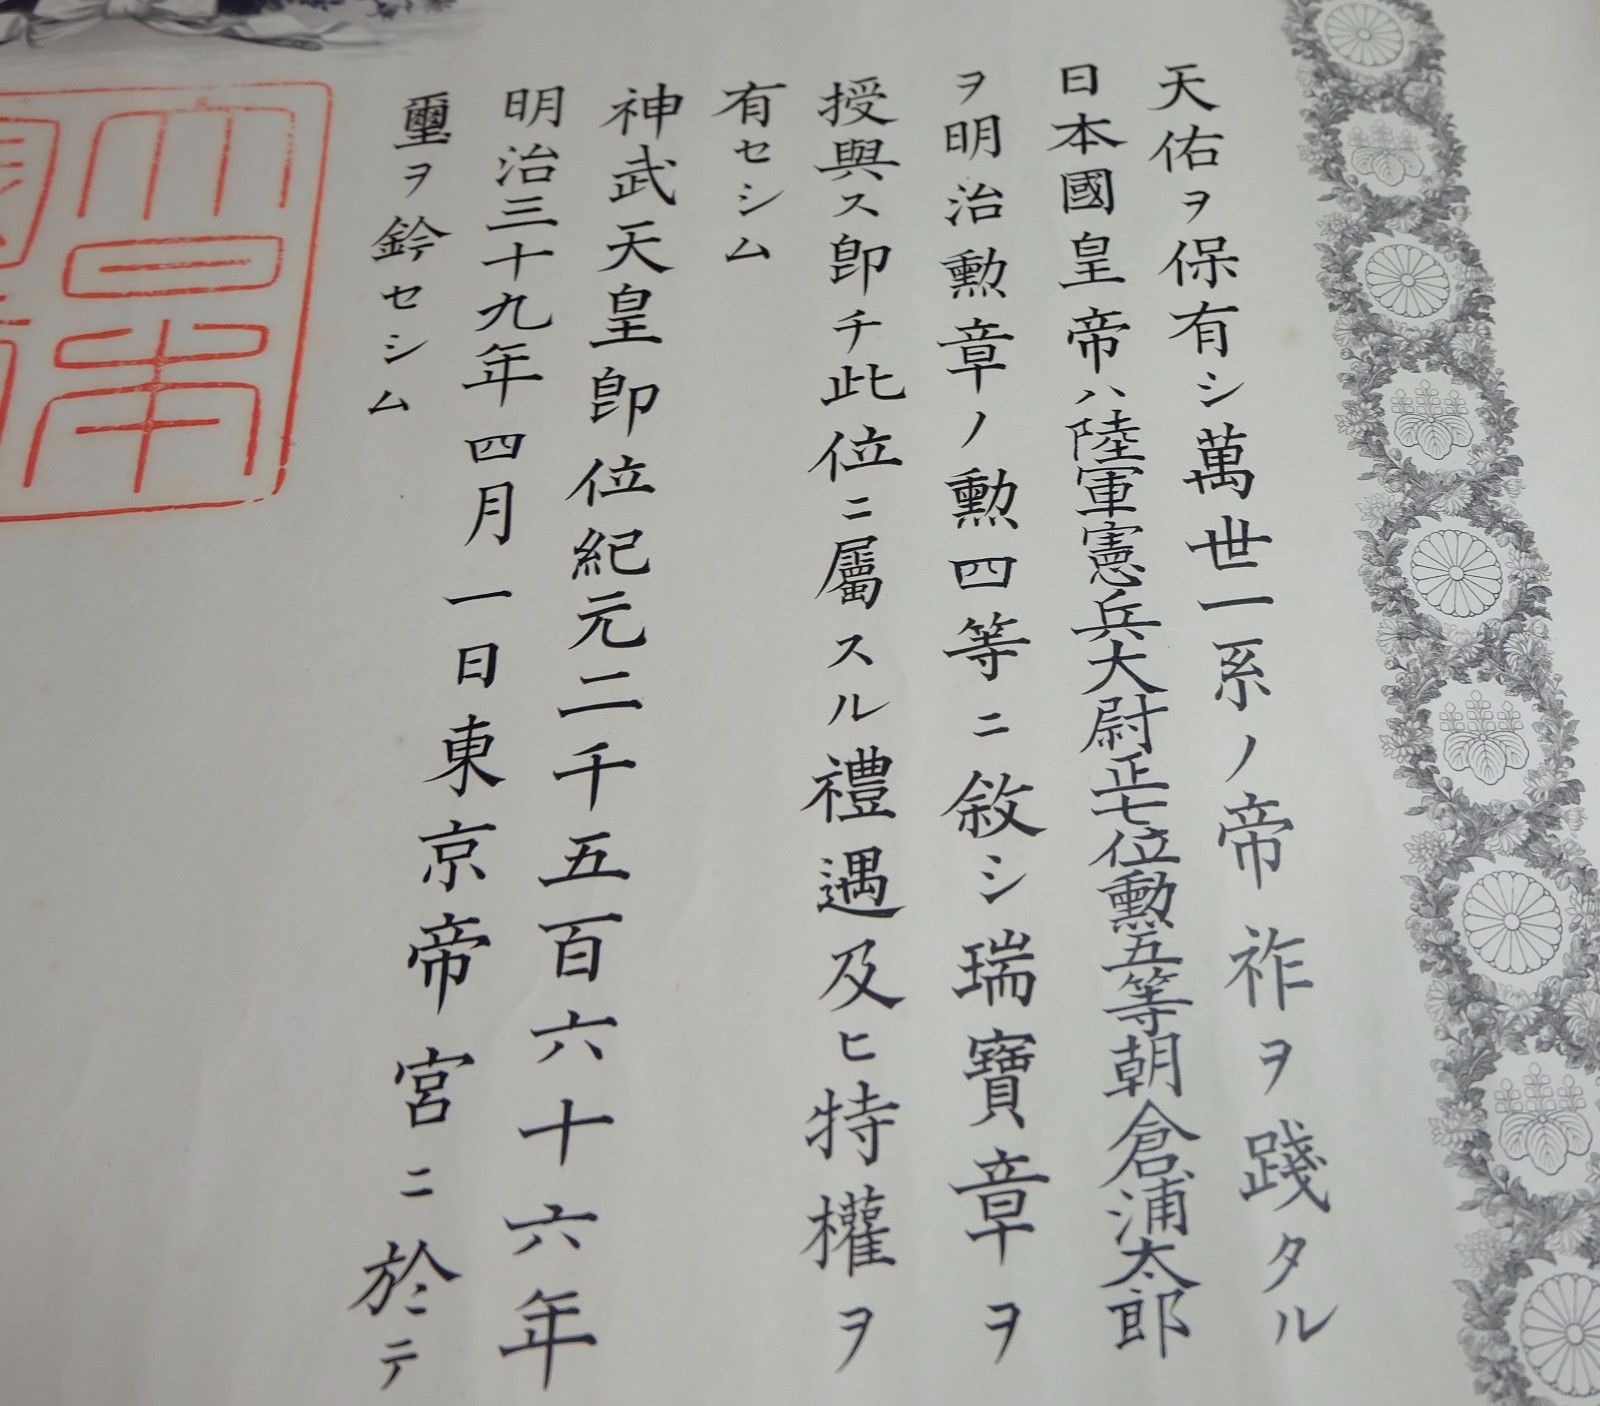 Kenpeitai Award Document.jpg